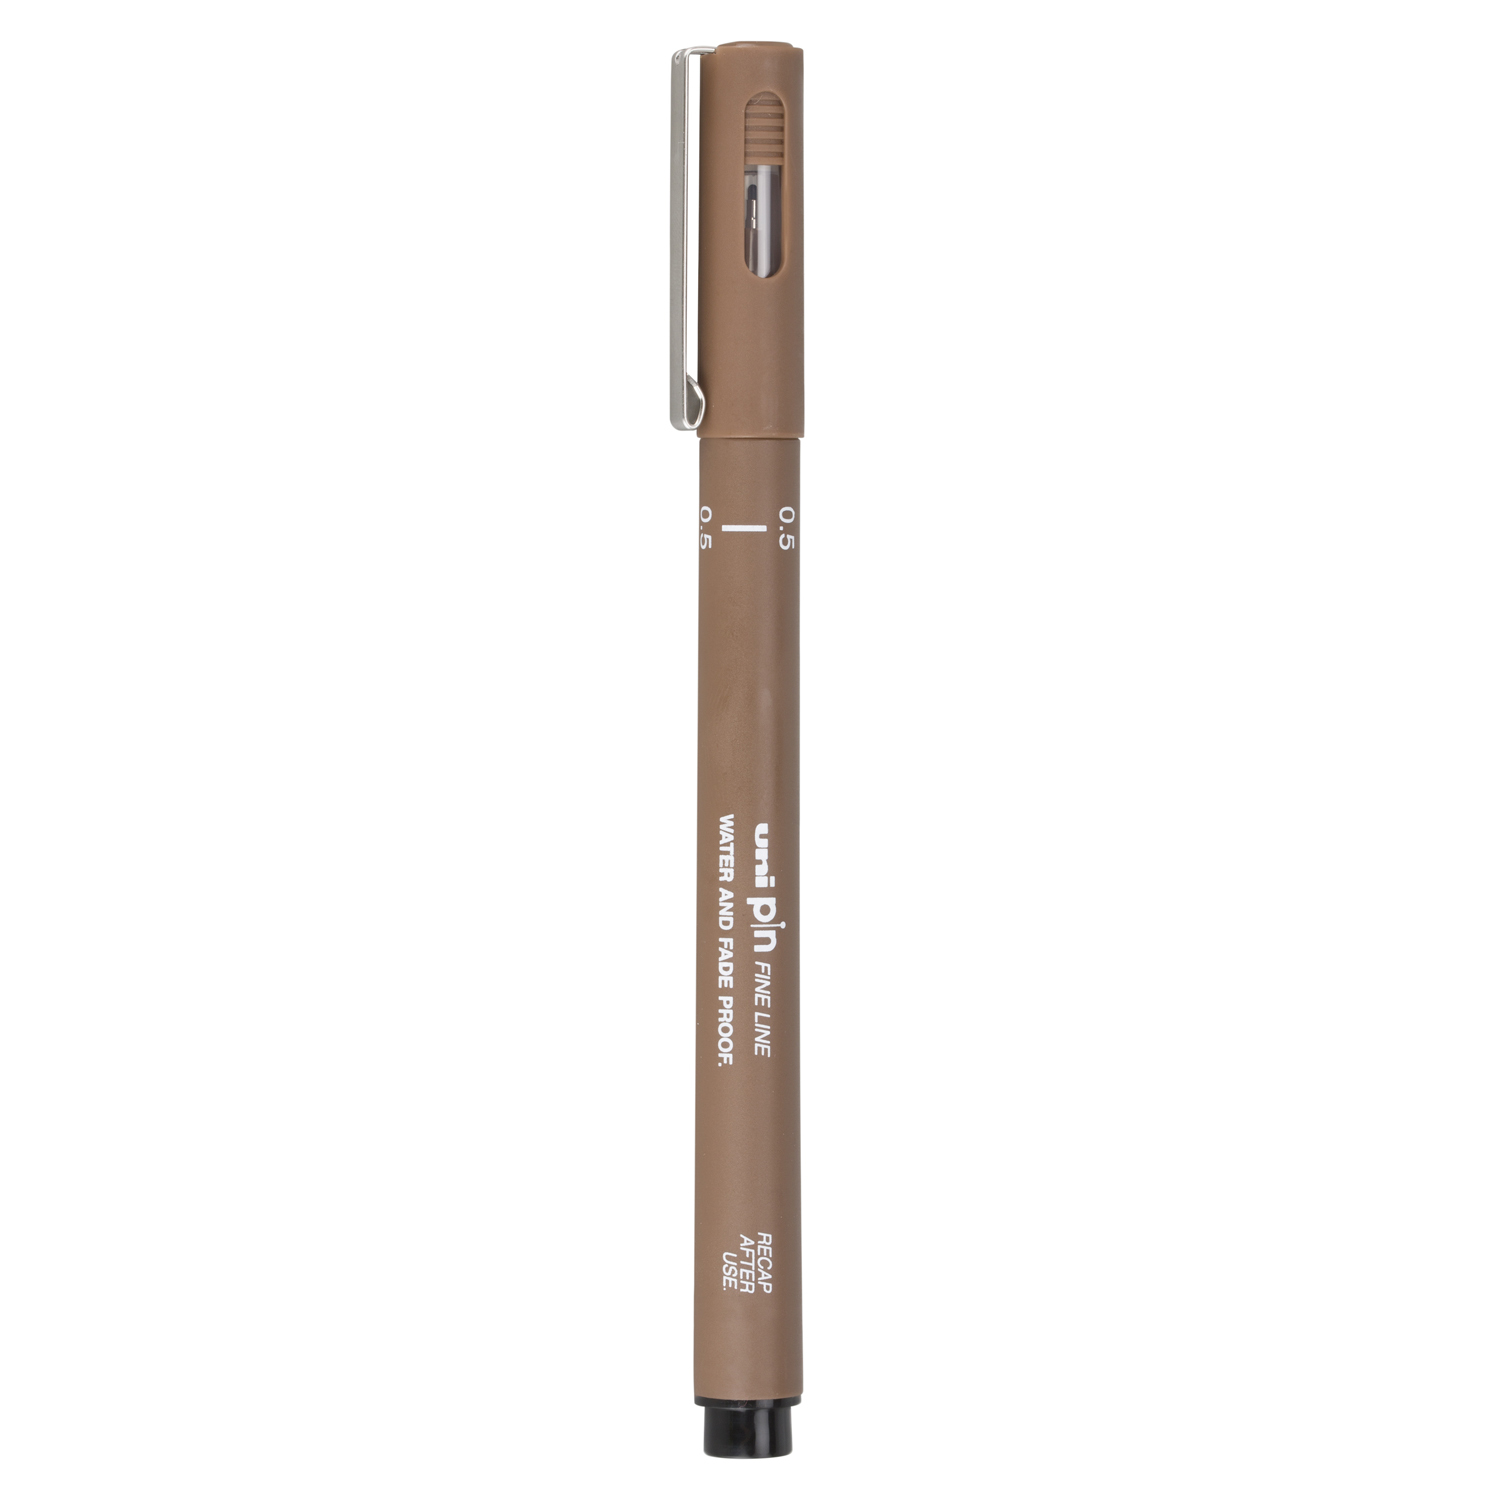 Uniball Pin Fine Liner Drawing Pen - Sepia / 0.5mm Image 1